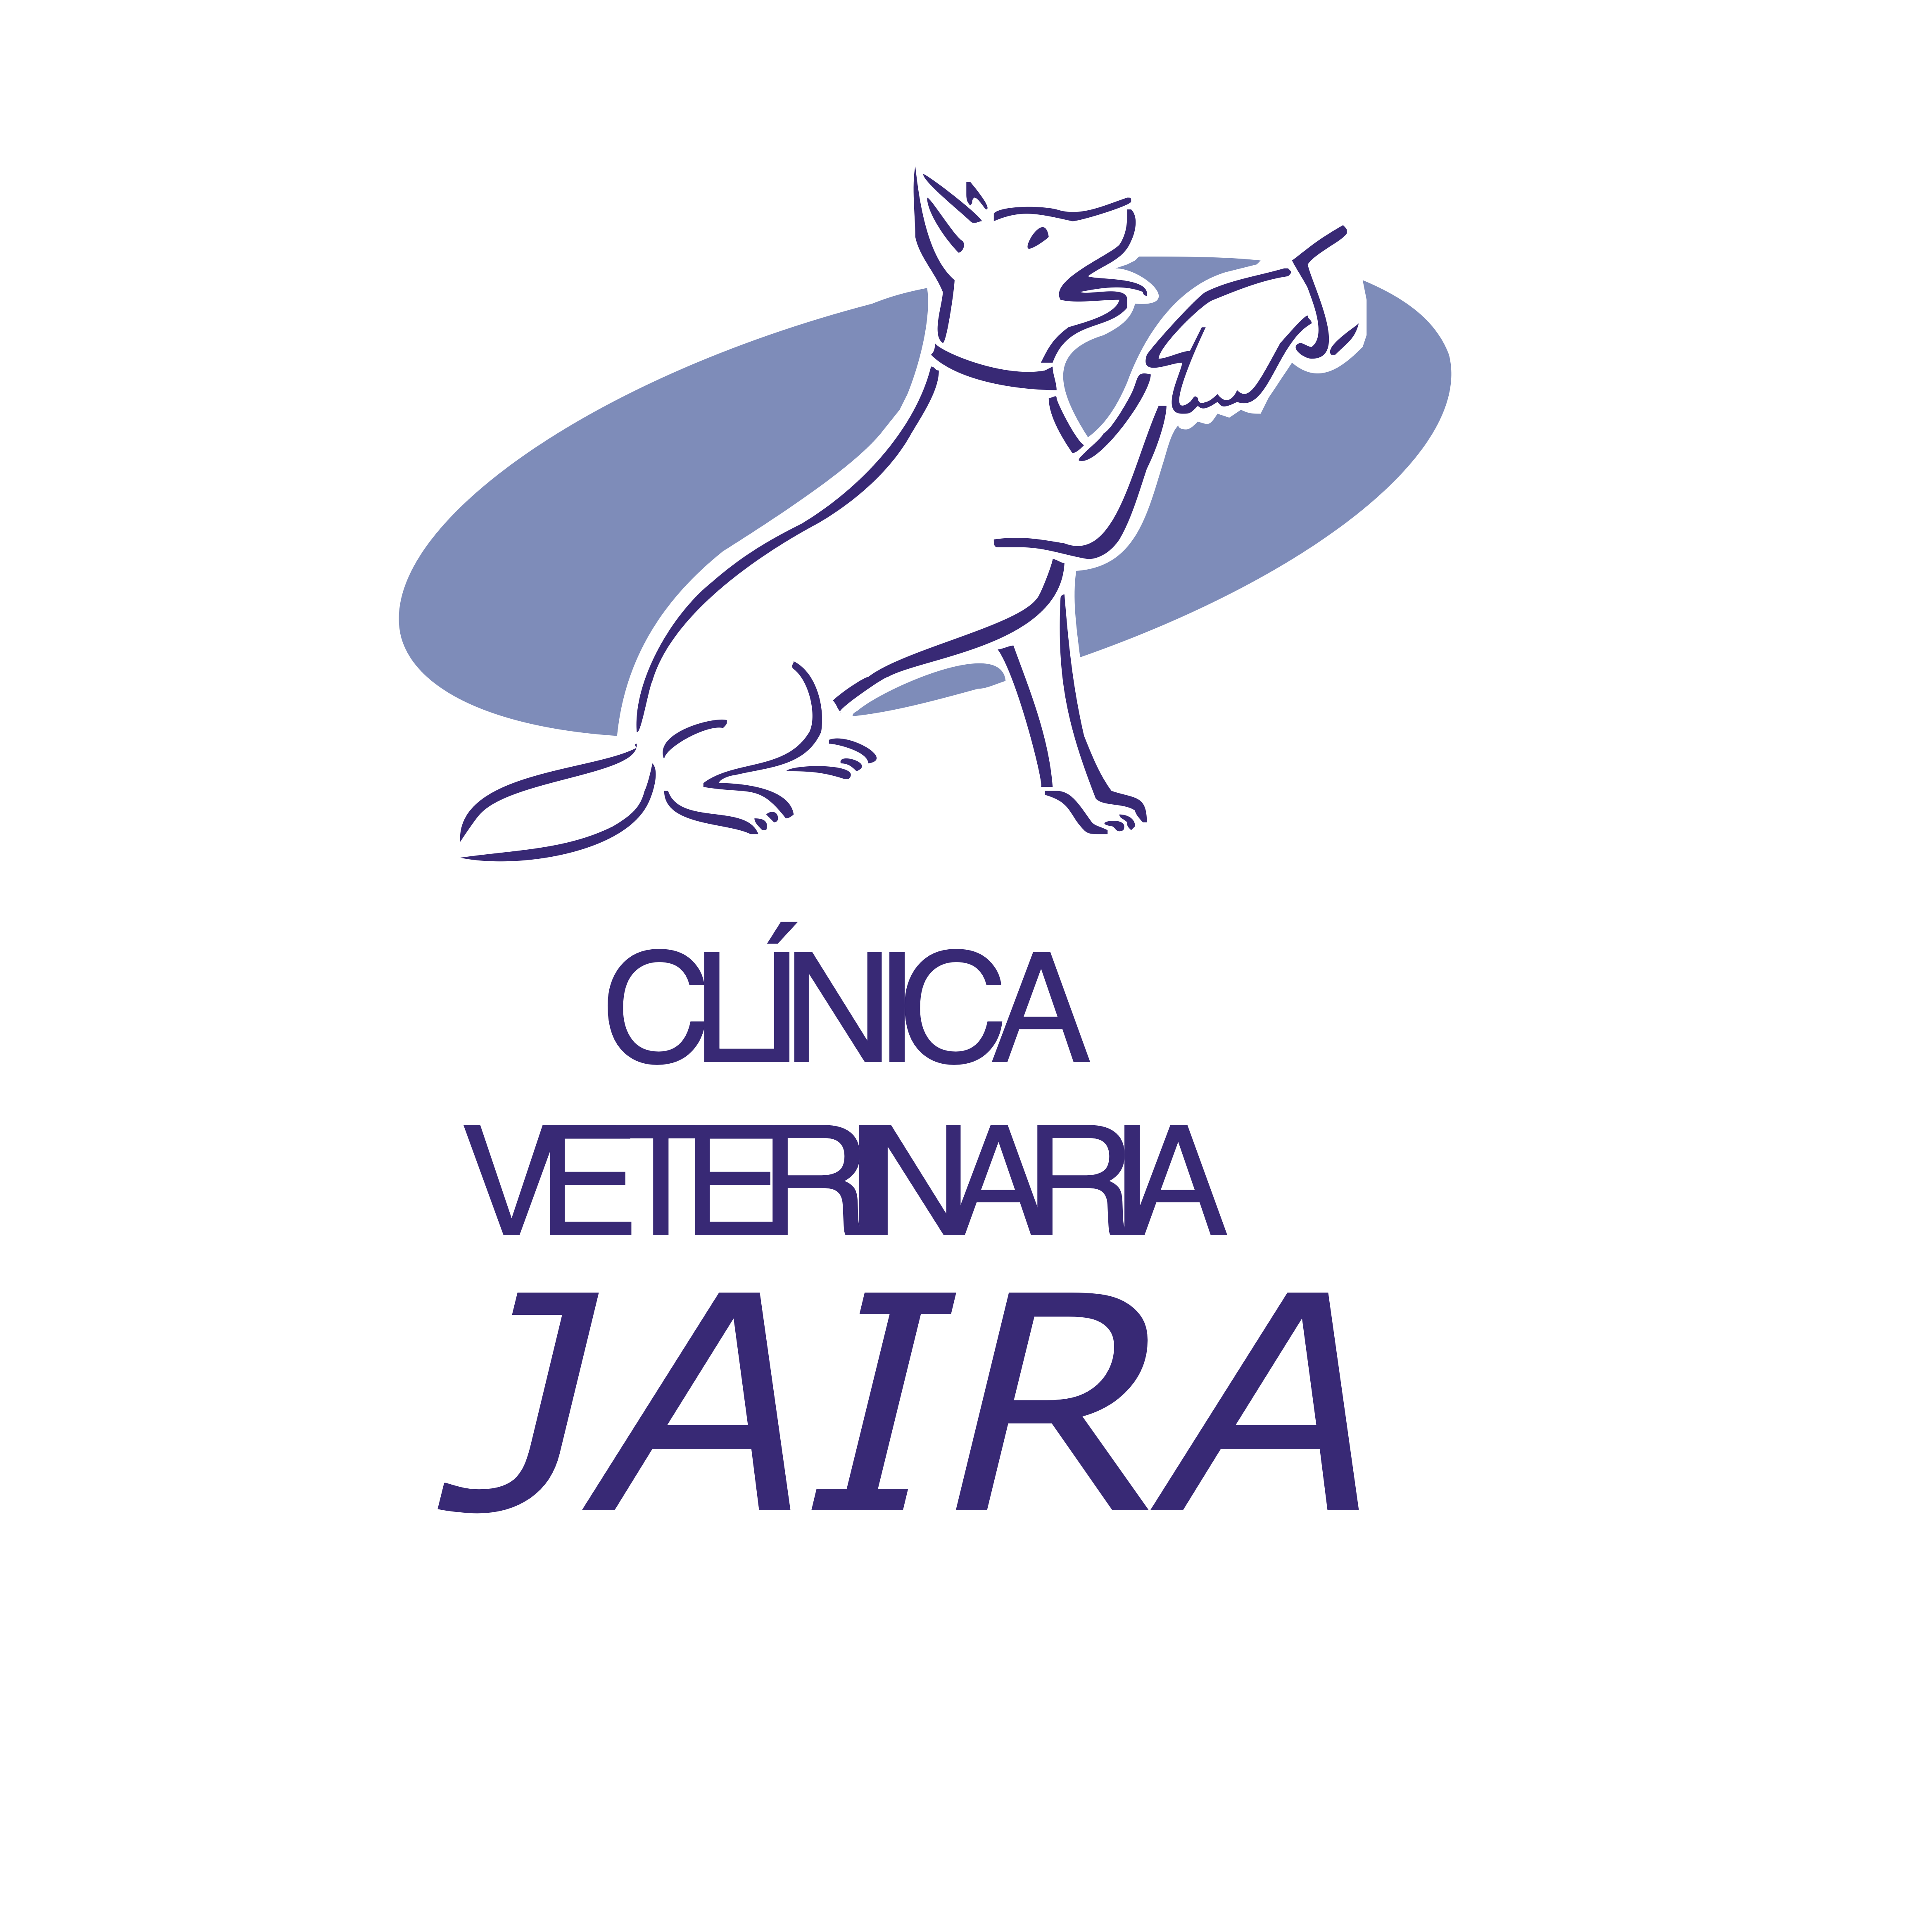 Clínica Veterinaria Jaira Logo